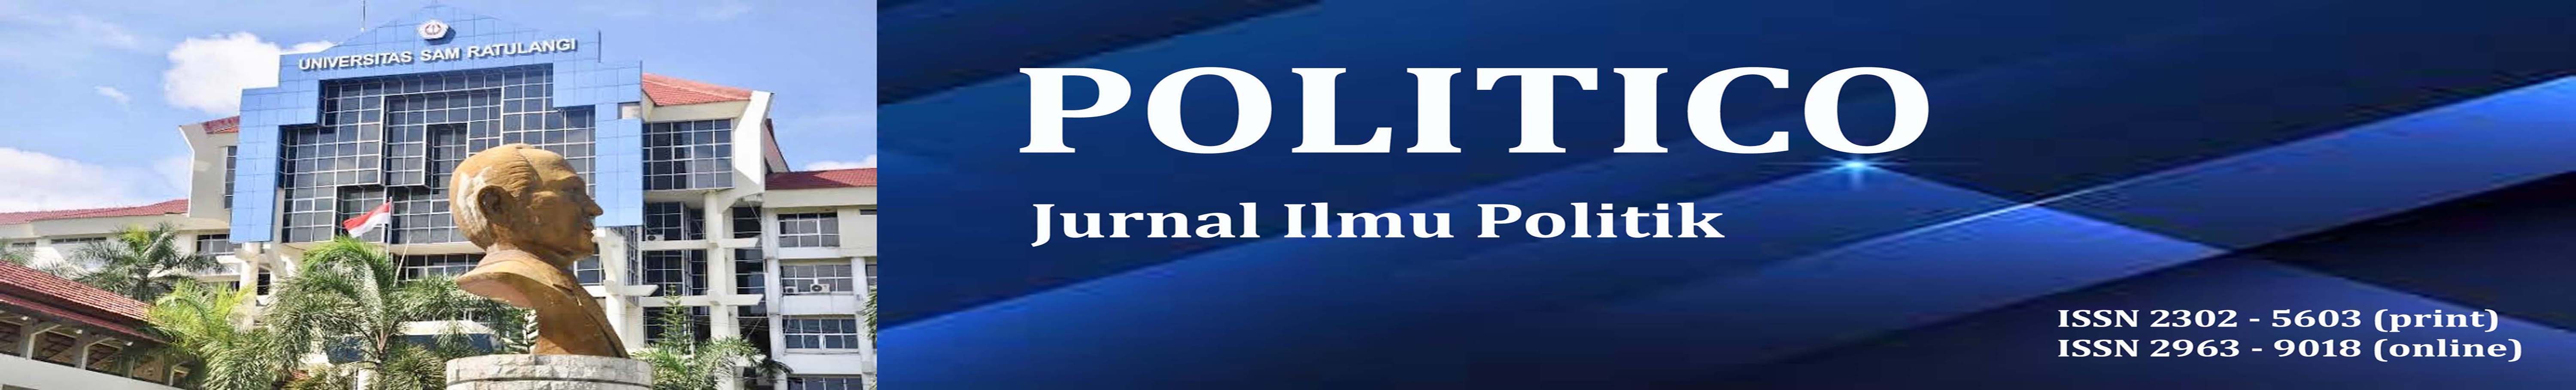 Politico: Jurnal Ilmu Politik